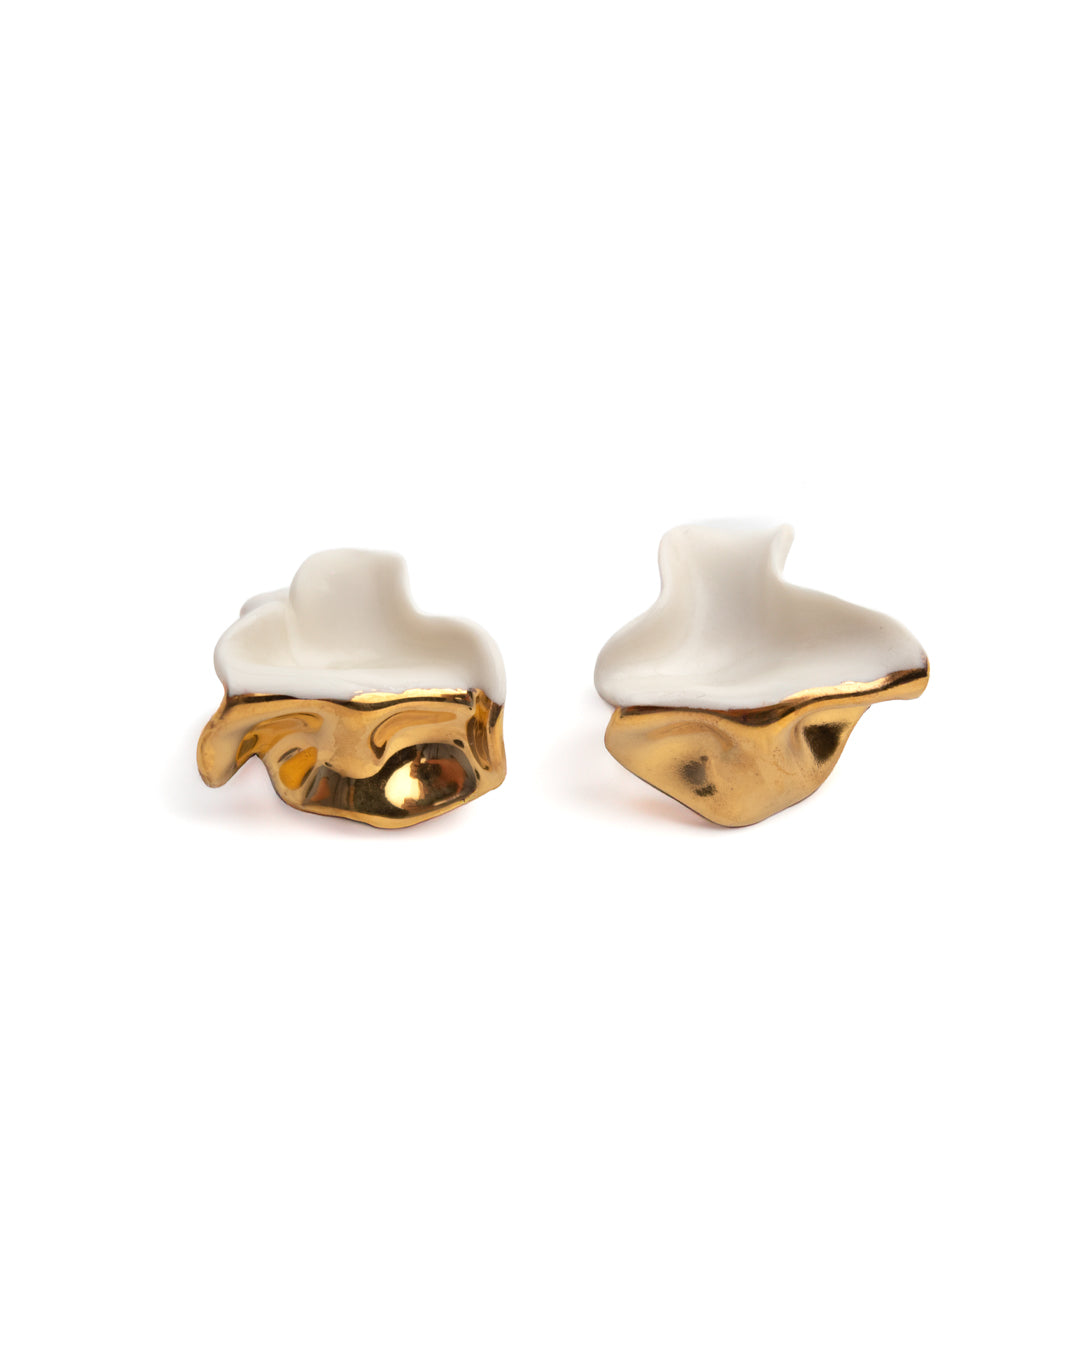 Ceramic gold earrings handmade handcrafted